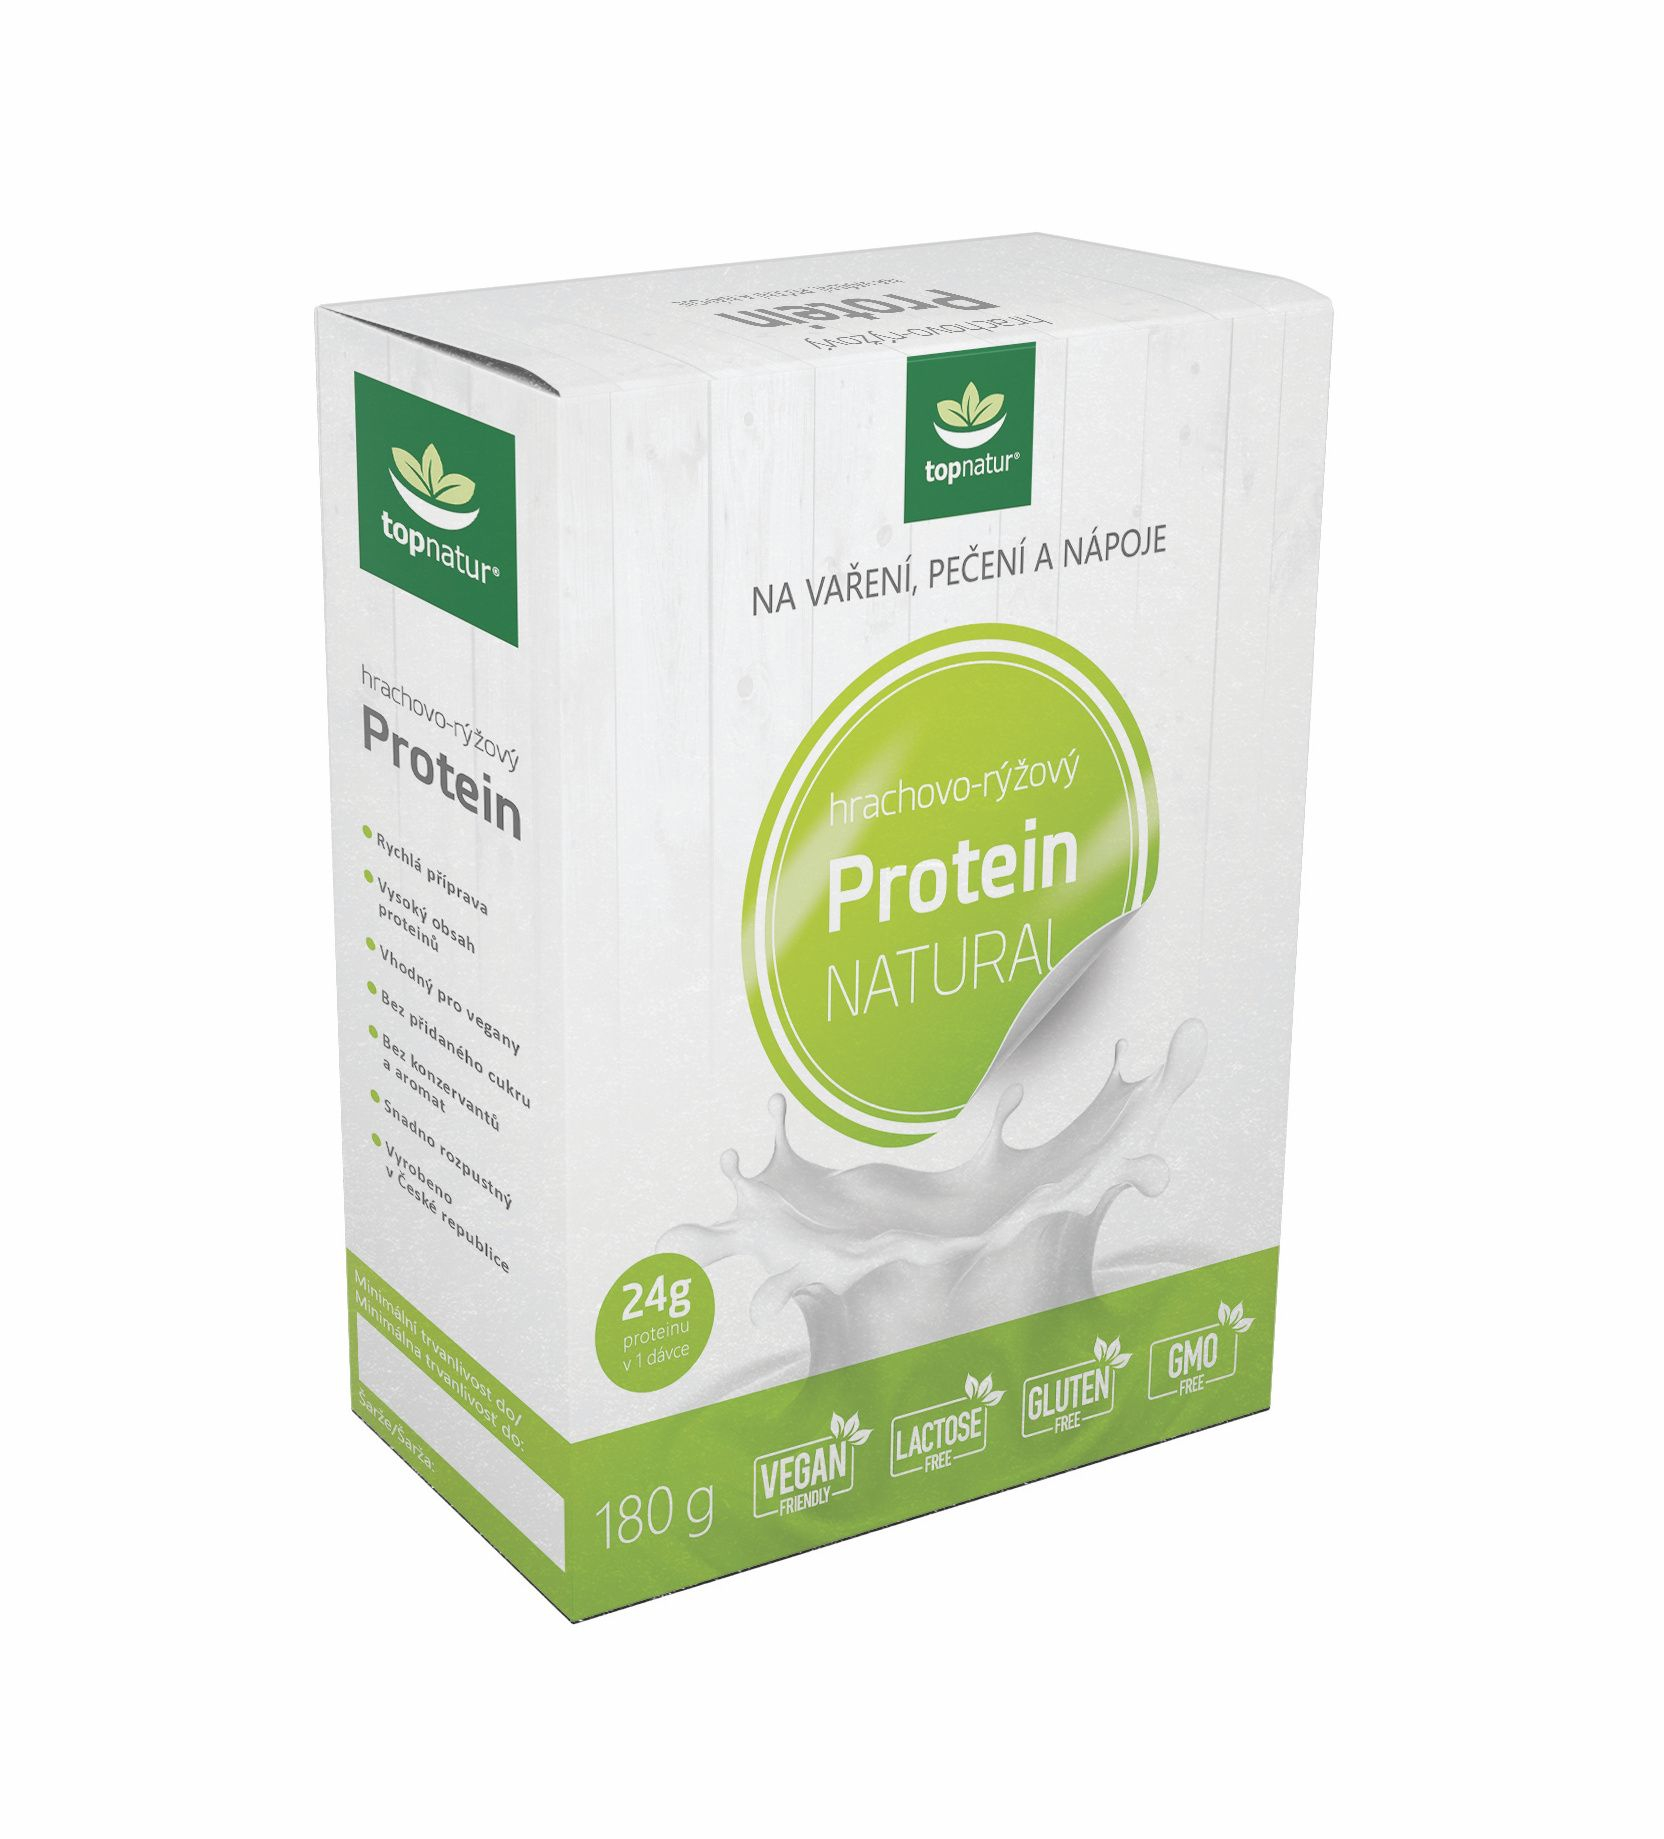 Topnatur Protein hrachovo-rýžový 180 g Topnatur